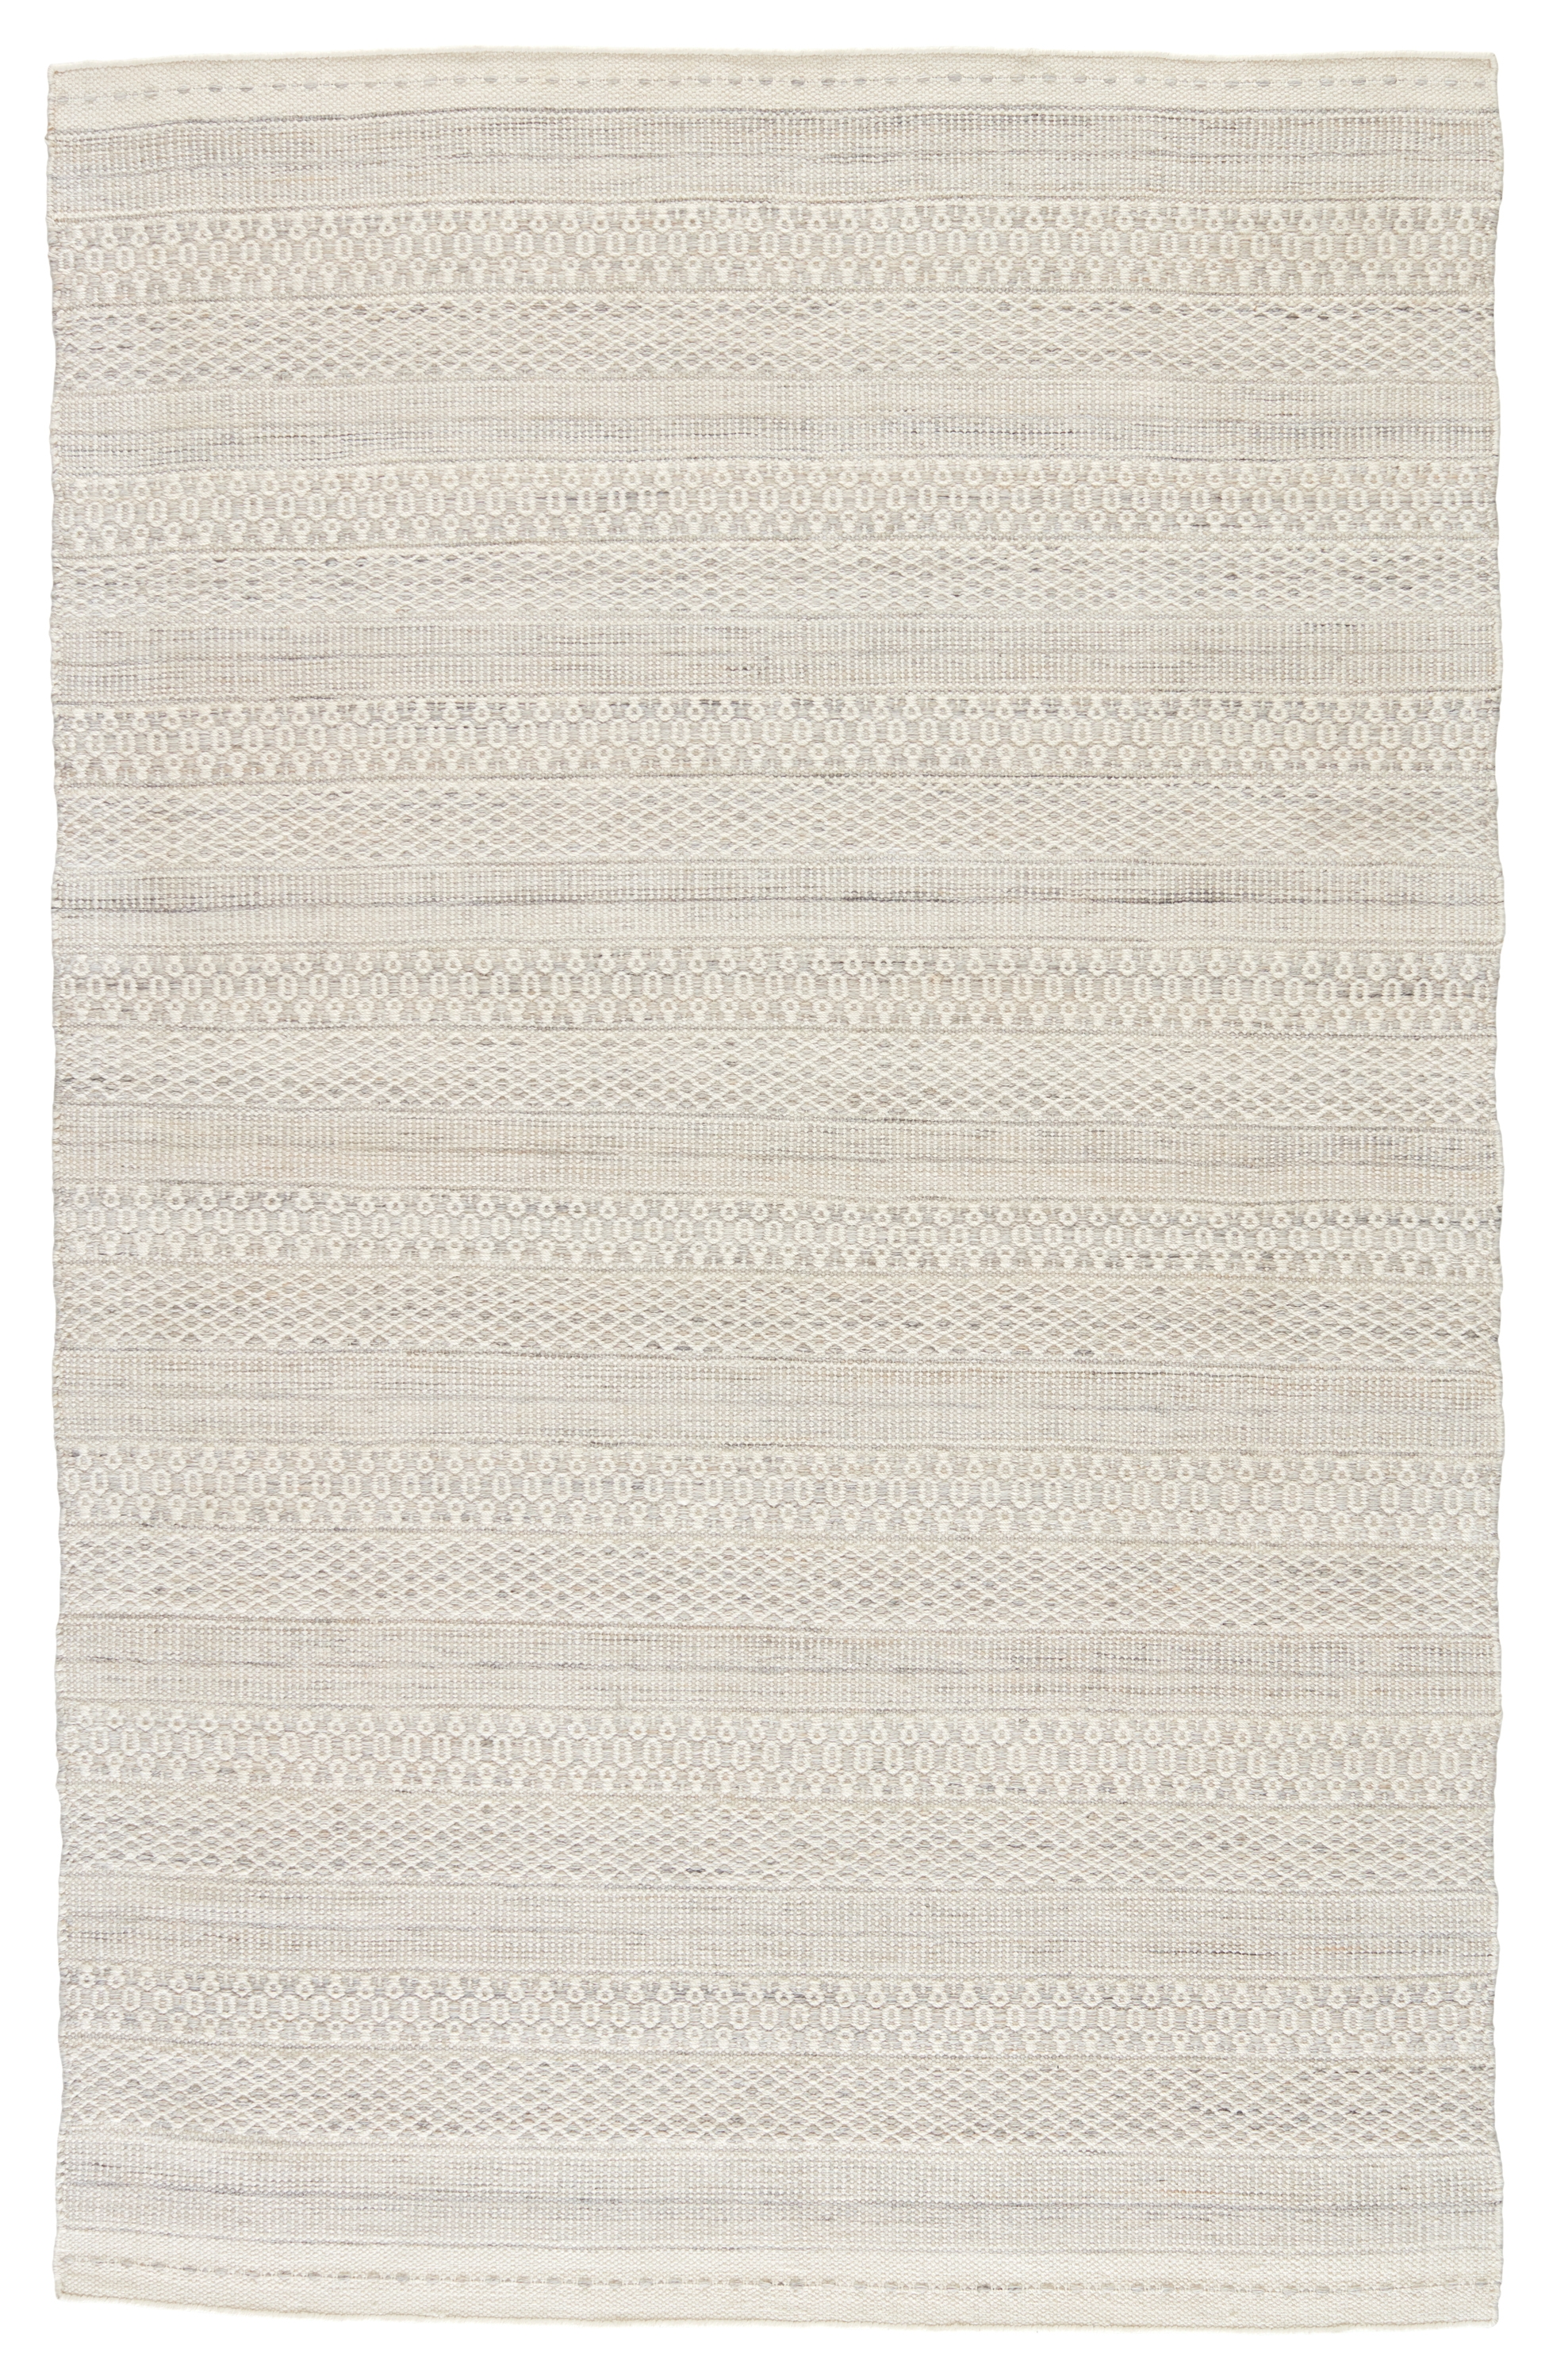 Lenna Indoor/ Outdoor Tribal Cream/ Light Gray Area Rug (9'X12') - Image 0